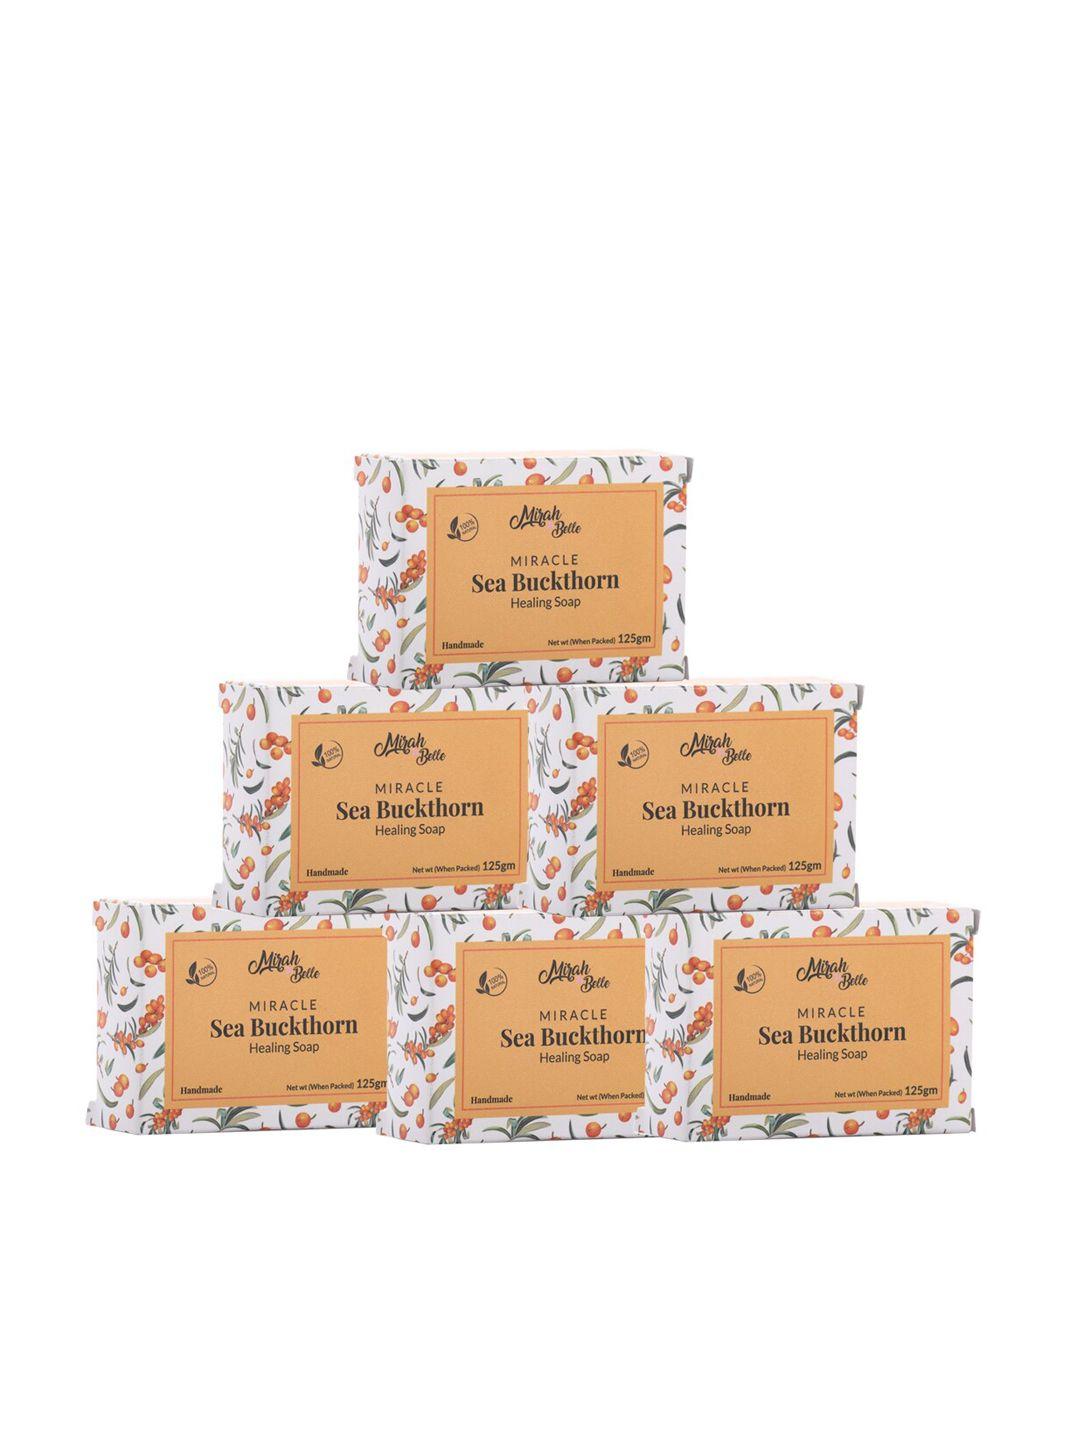 mirah belle pack of 6 sea buckthorn healing soaps